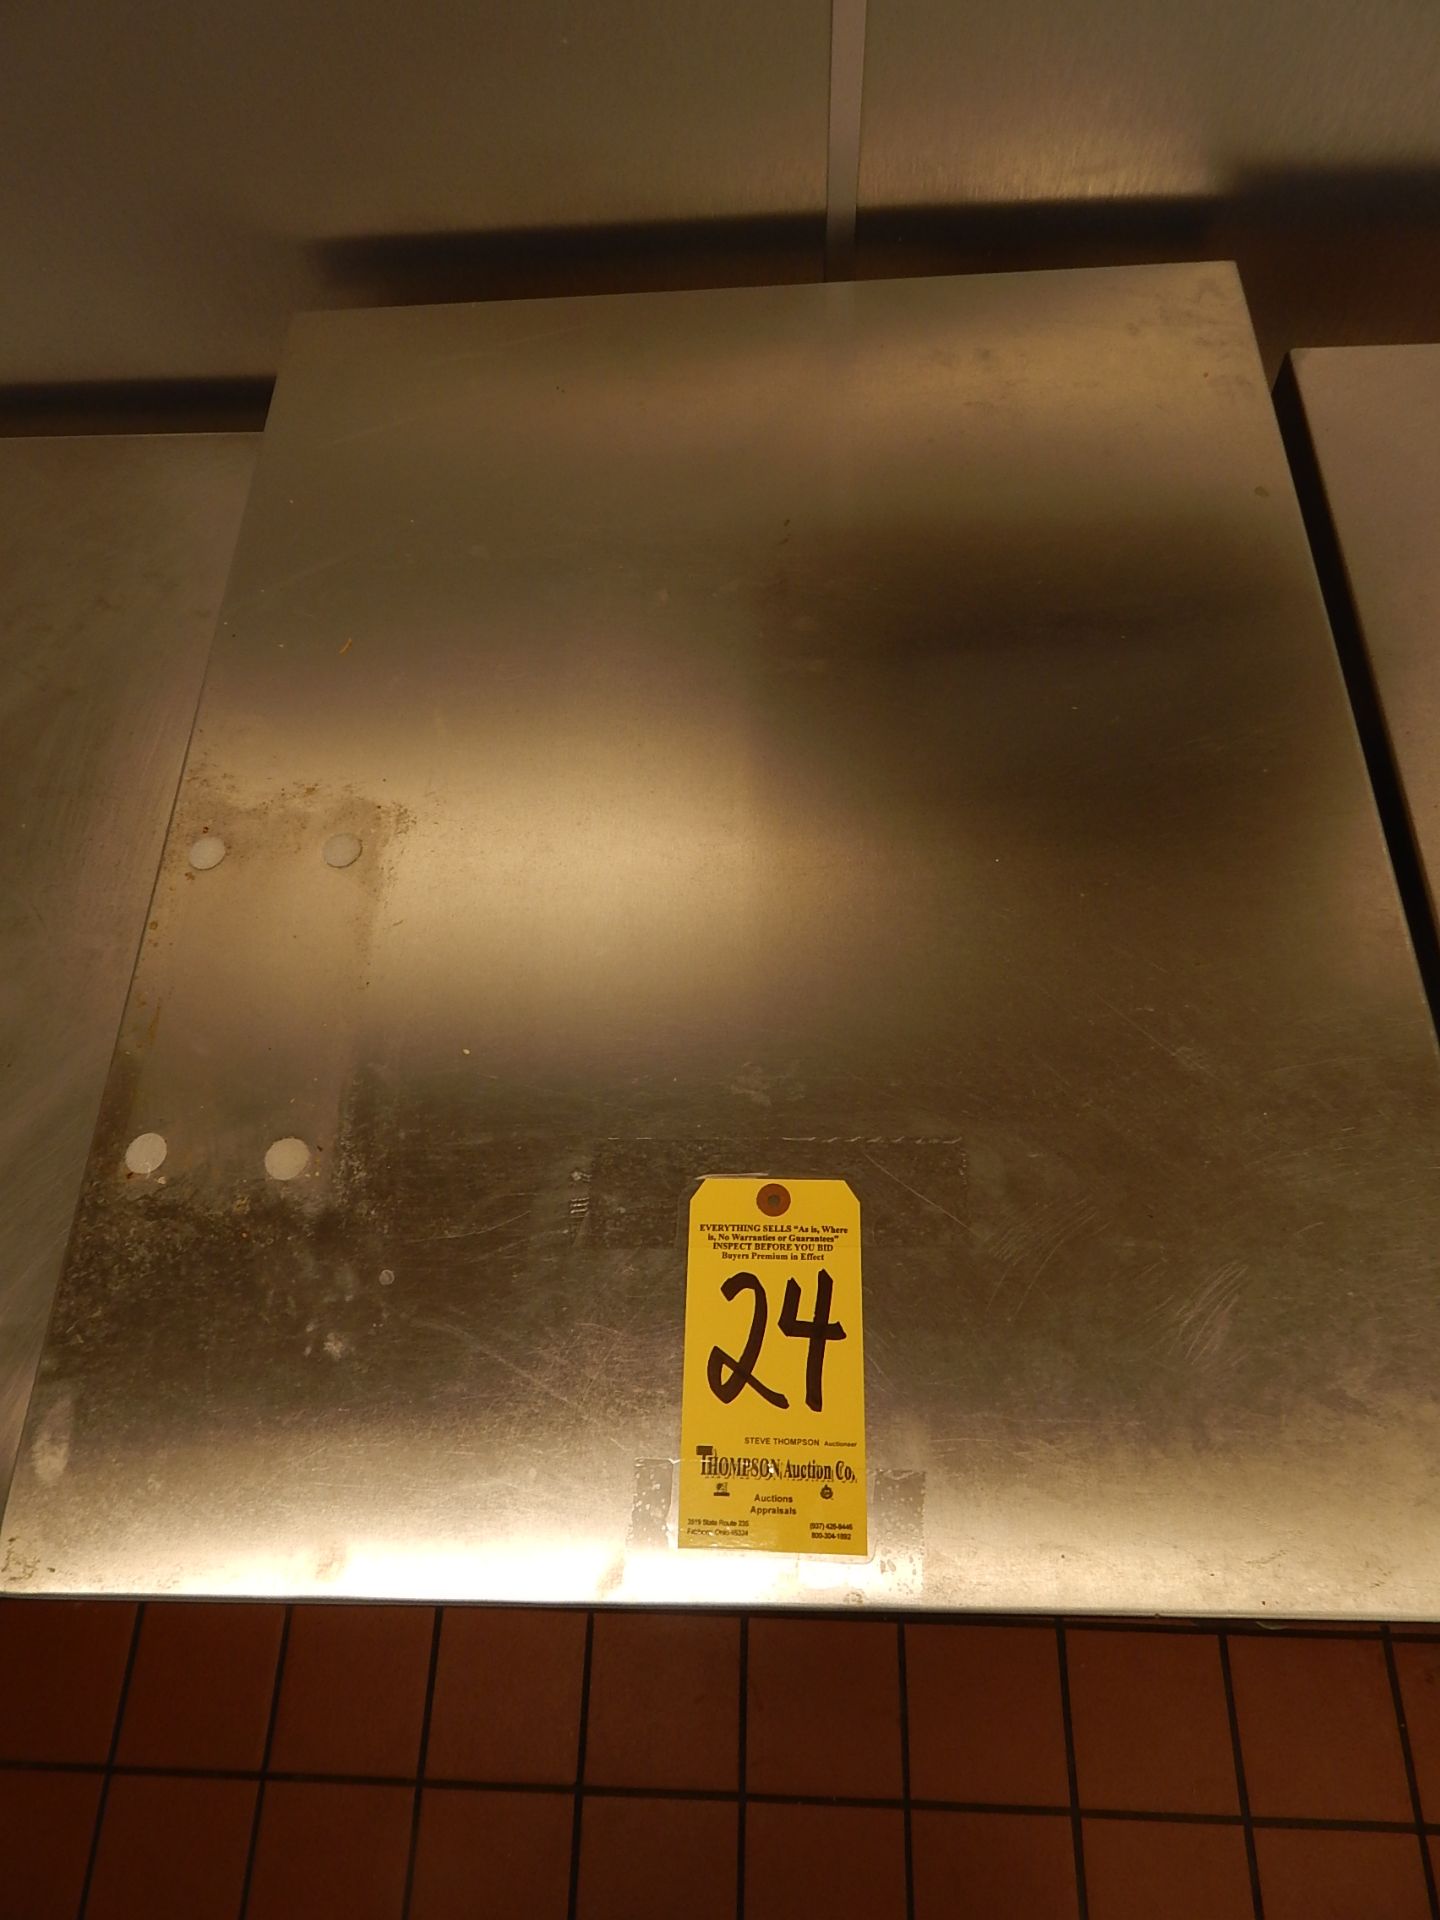 Stainless Steel Table with Galvanized Lower Shelf, 30" x 24" - Bild 2 aus 3